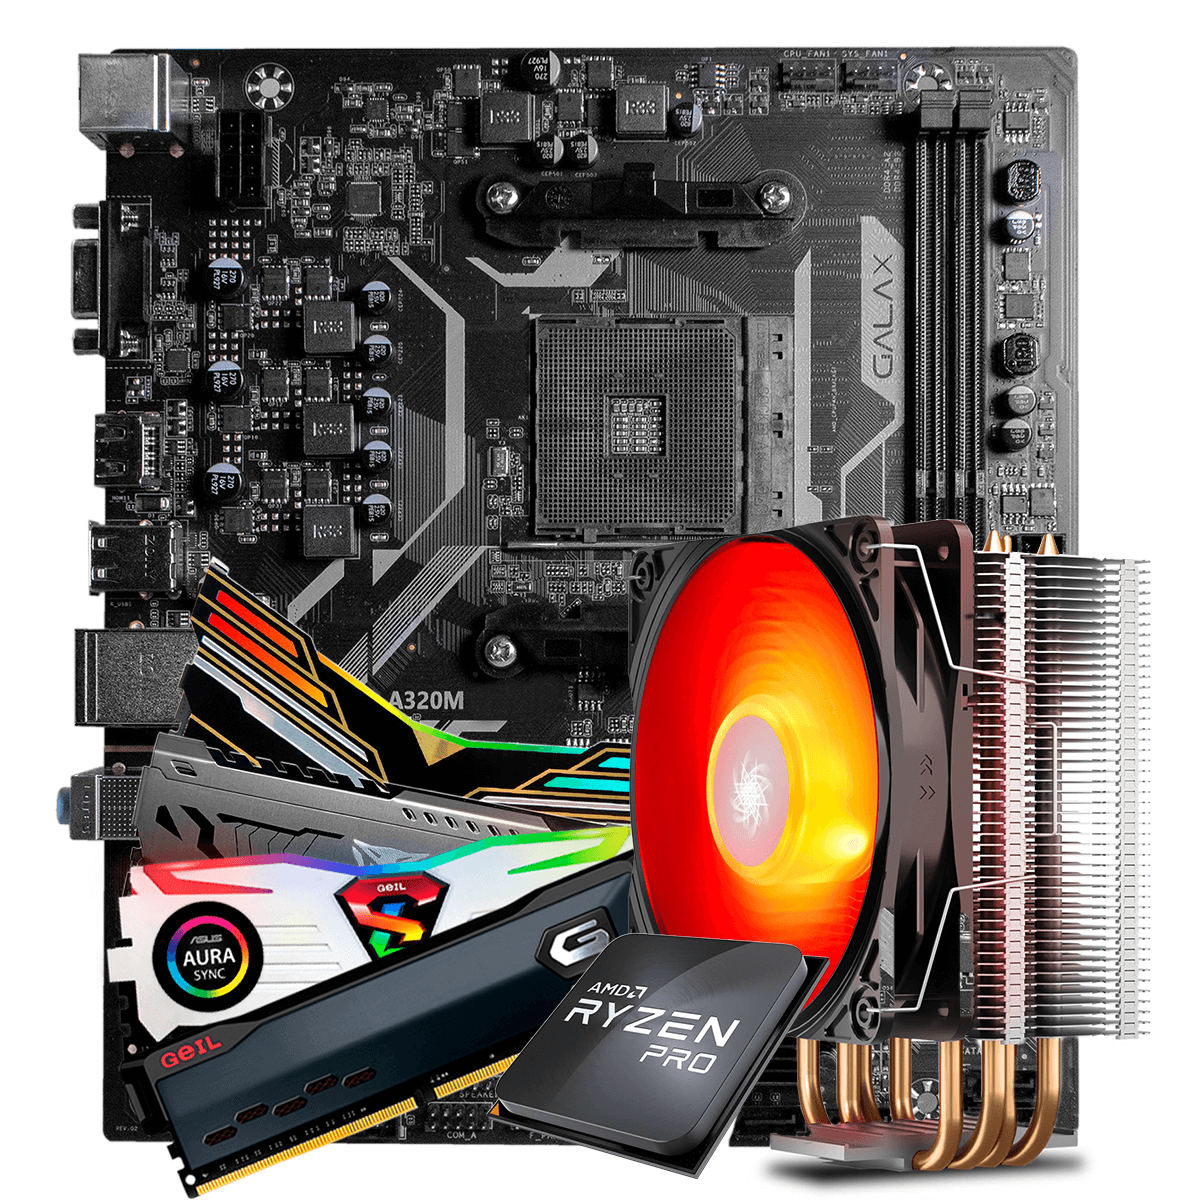 Kit Upgrade, AMD Ryzen 3 PRO 3200GE 3.8GHz Turbo + Cooler + Galax A320M + Memória DDR4 8GB 3000MHz